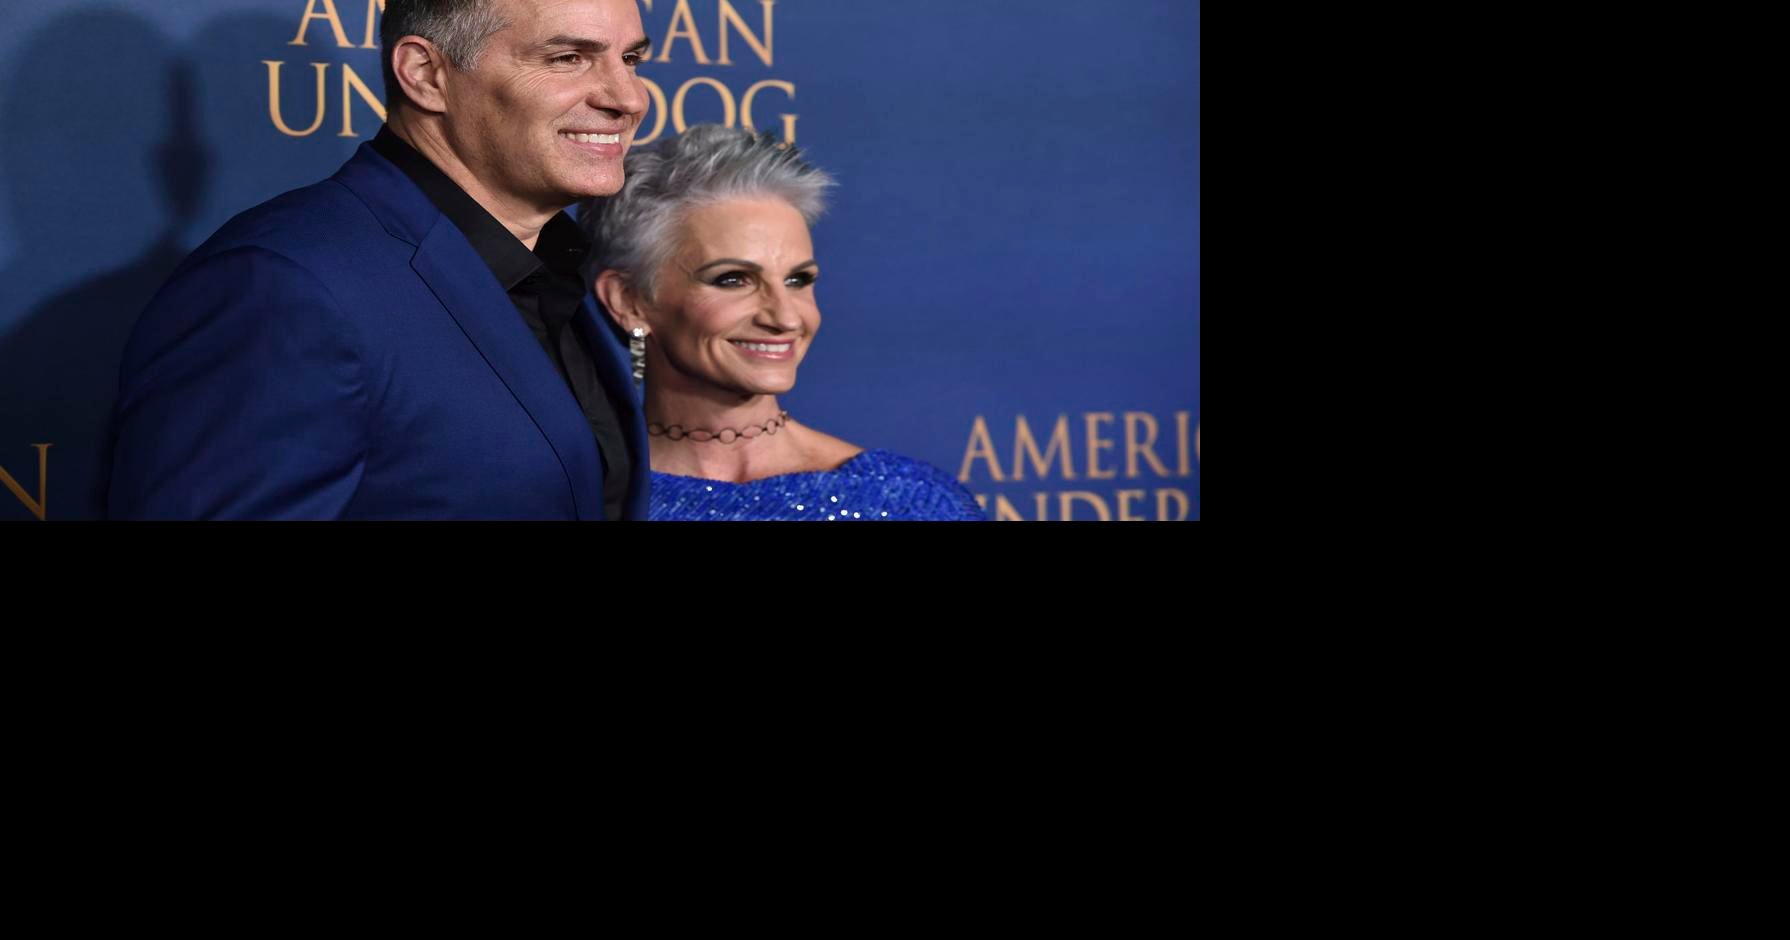 Kurt and Brenda Warner to attend St. Louis screening of 'American